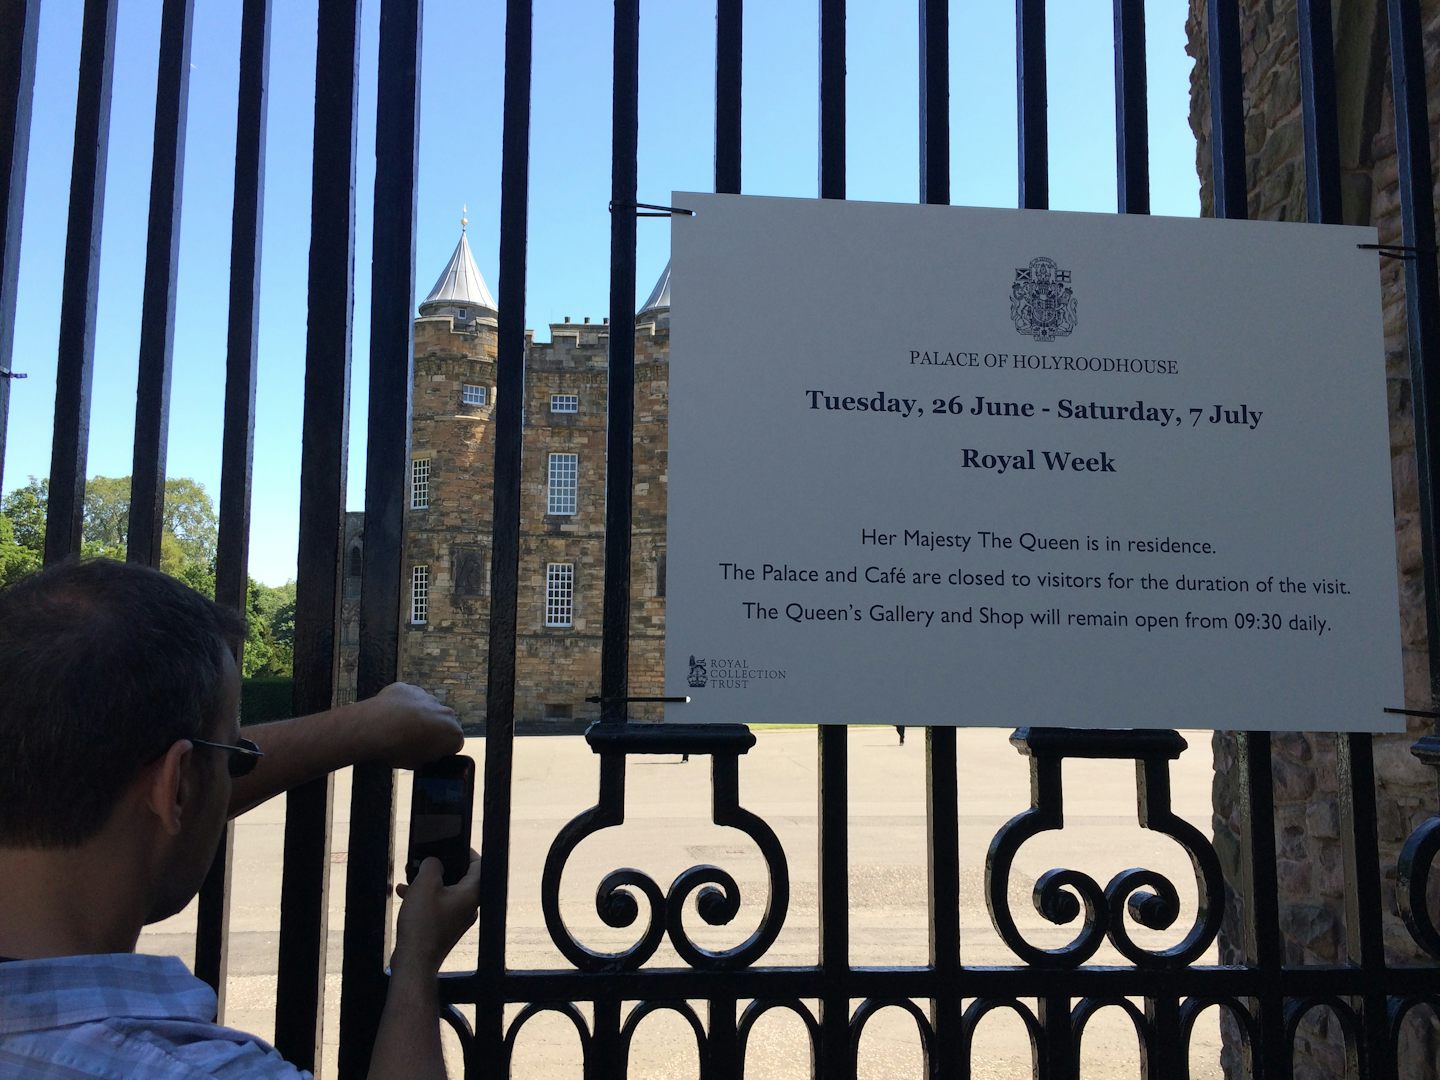 Edinburgh: No entry into Holyroods Palace!